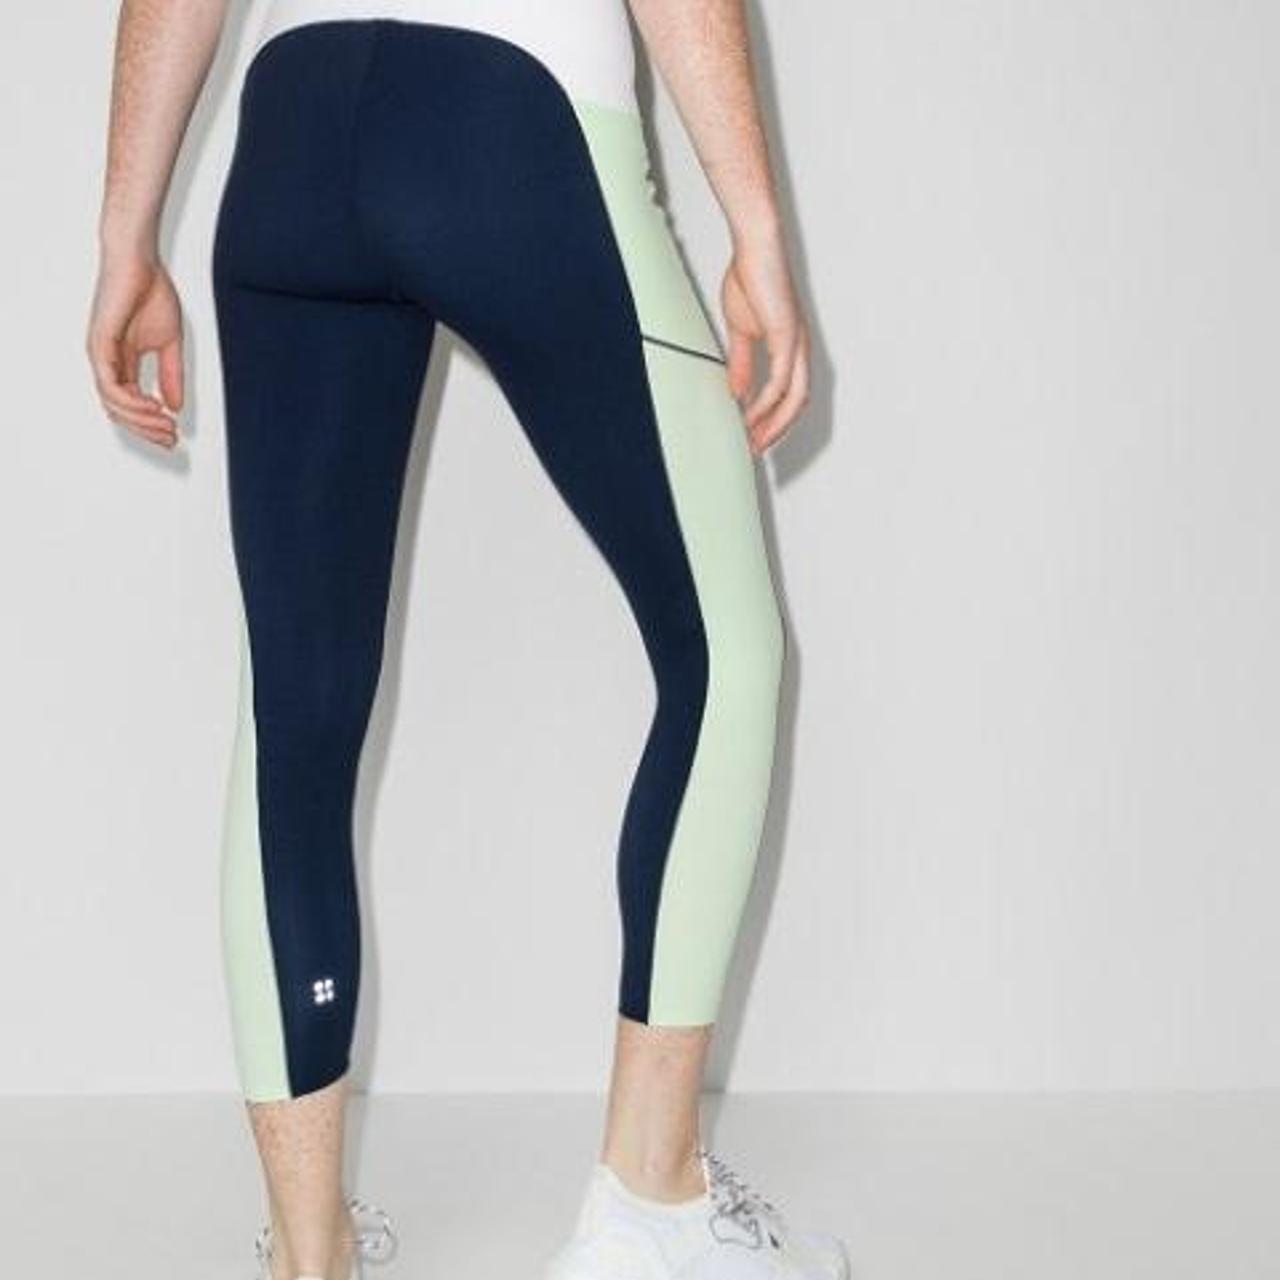 Brand: Sweaty Betty Features: Zero Gravity leggings - Depop